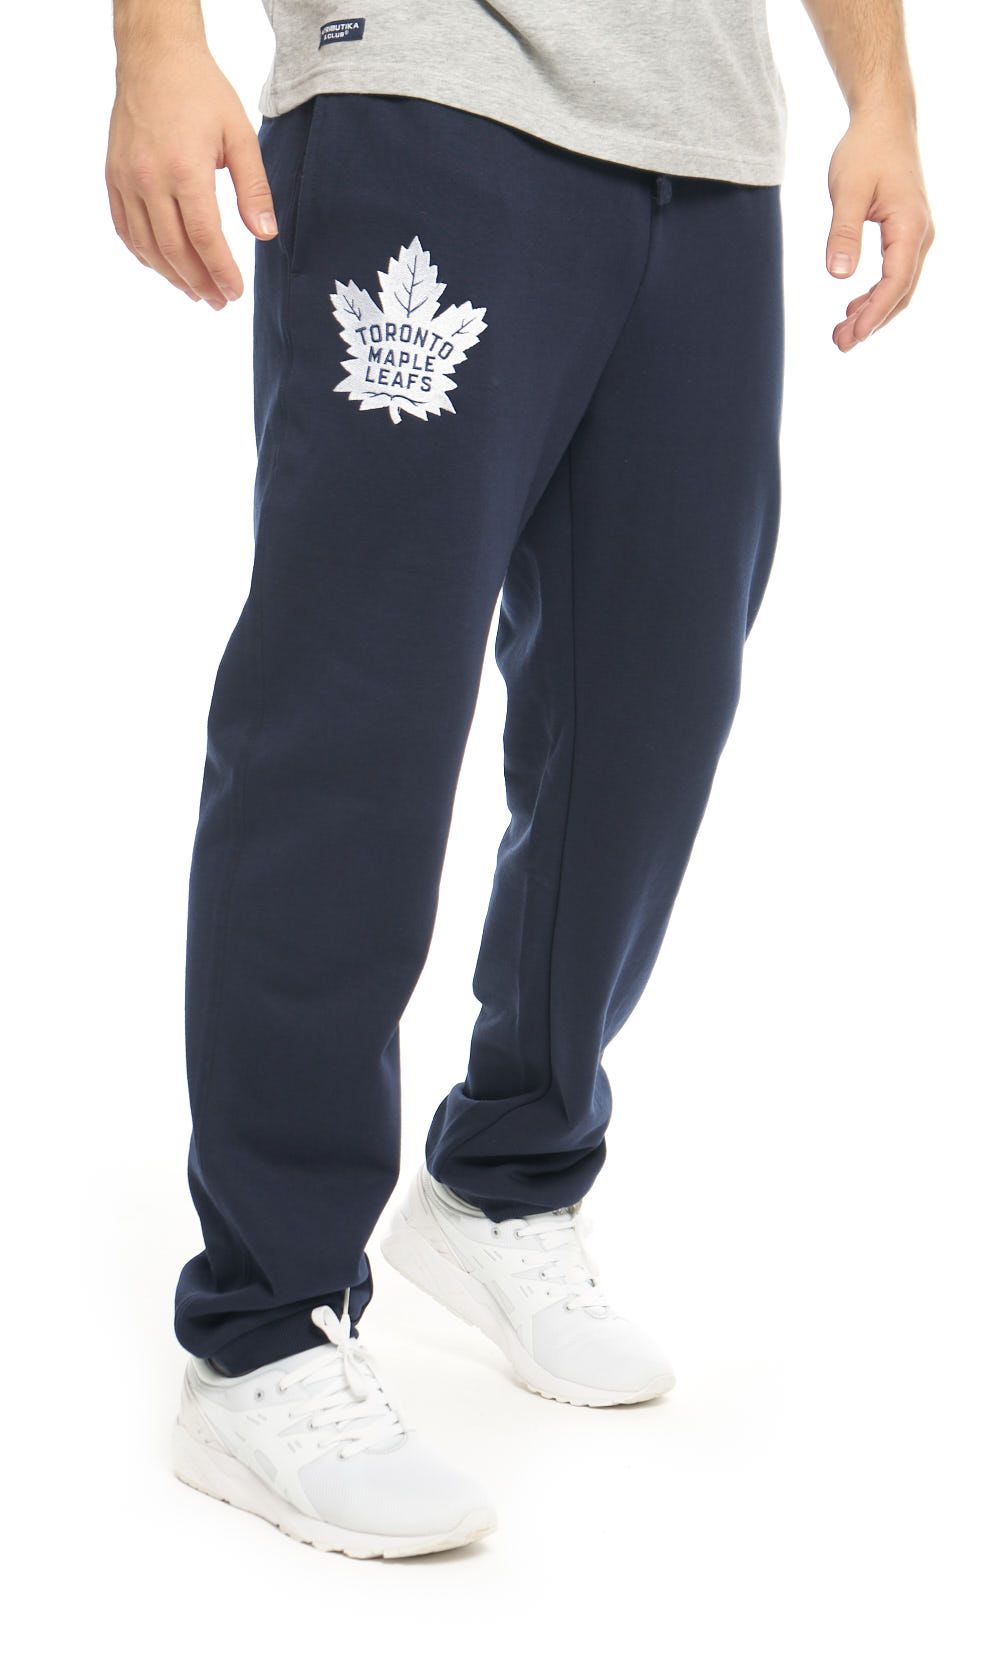 Спортивные брюки мужские Atributika&Club Торонто Мейпл Лифс 45890 синие L